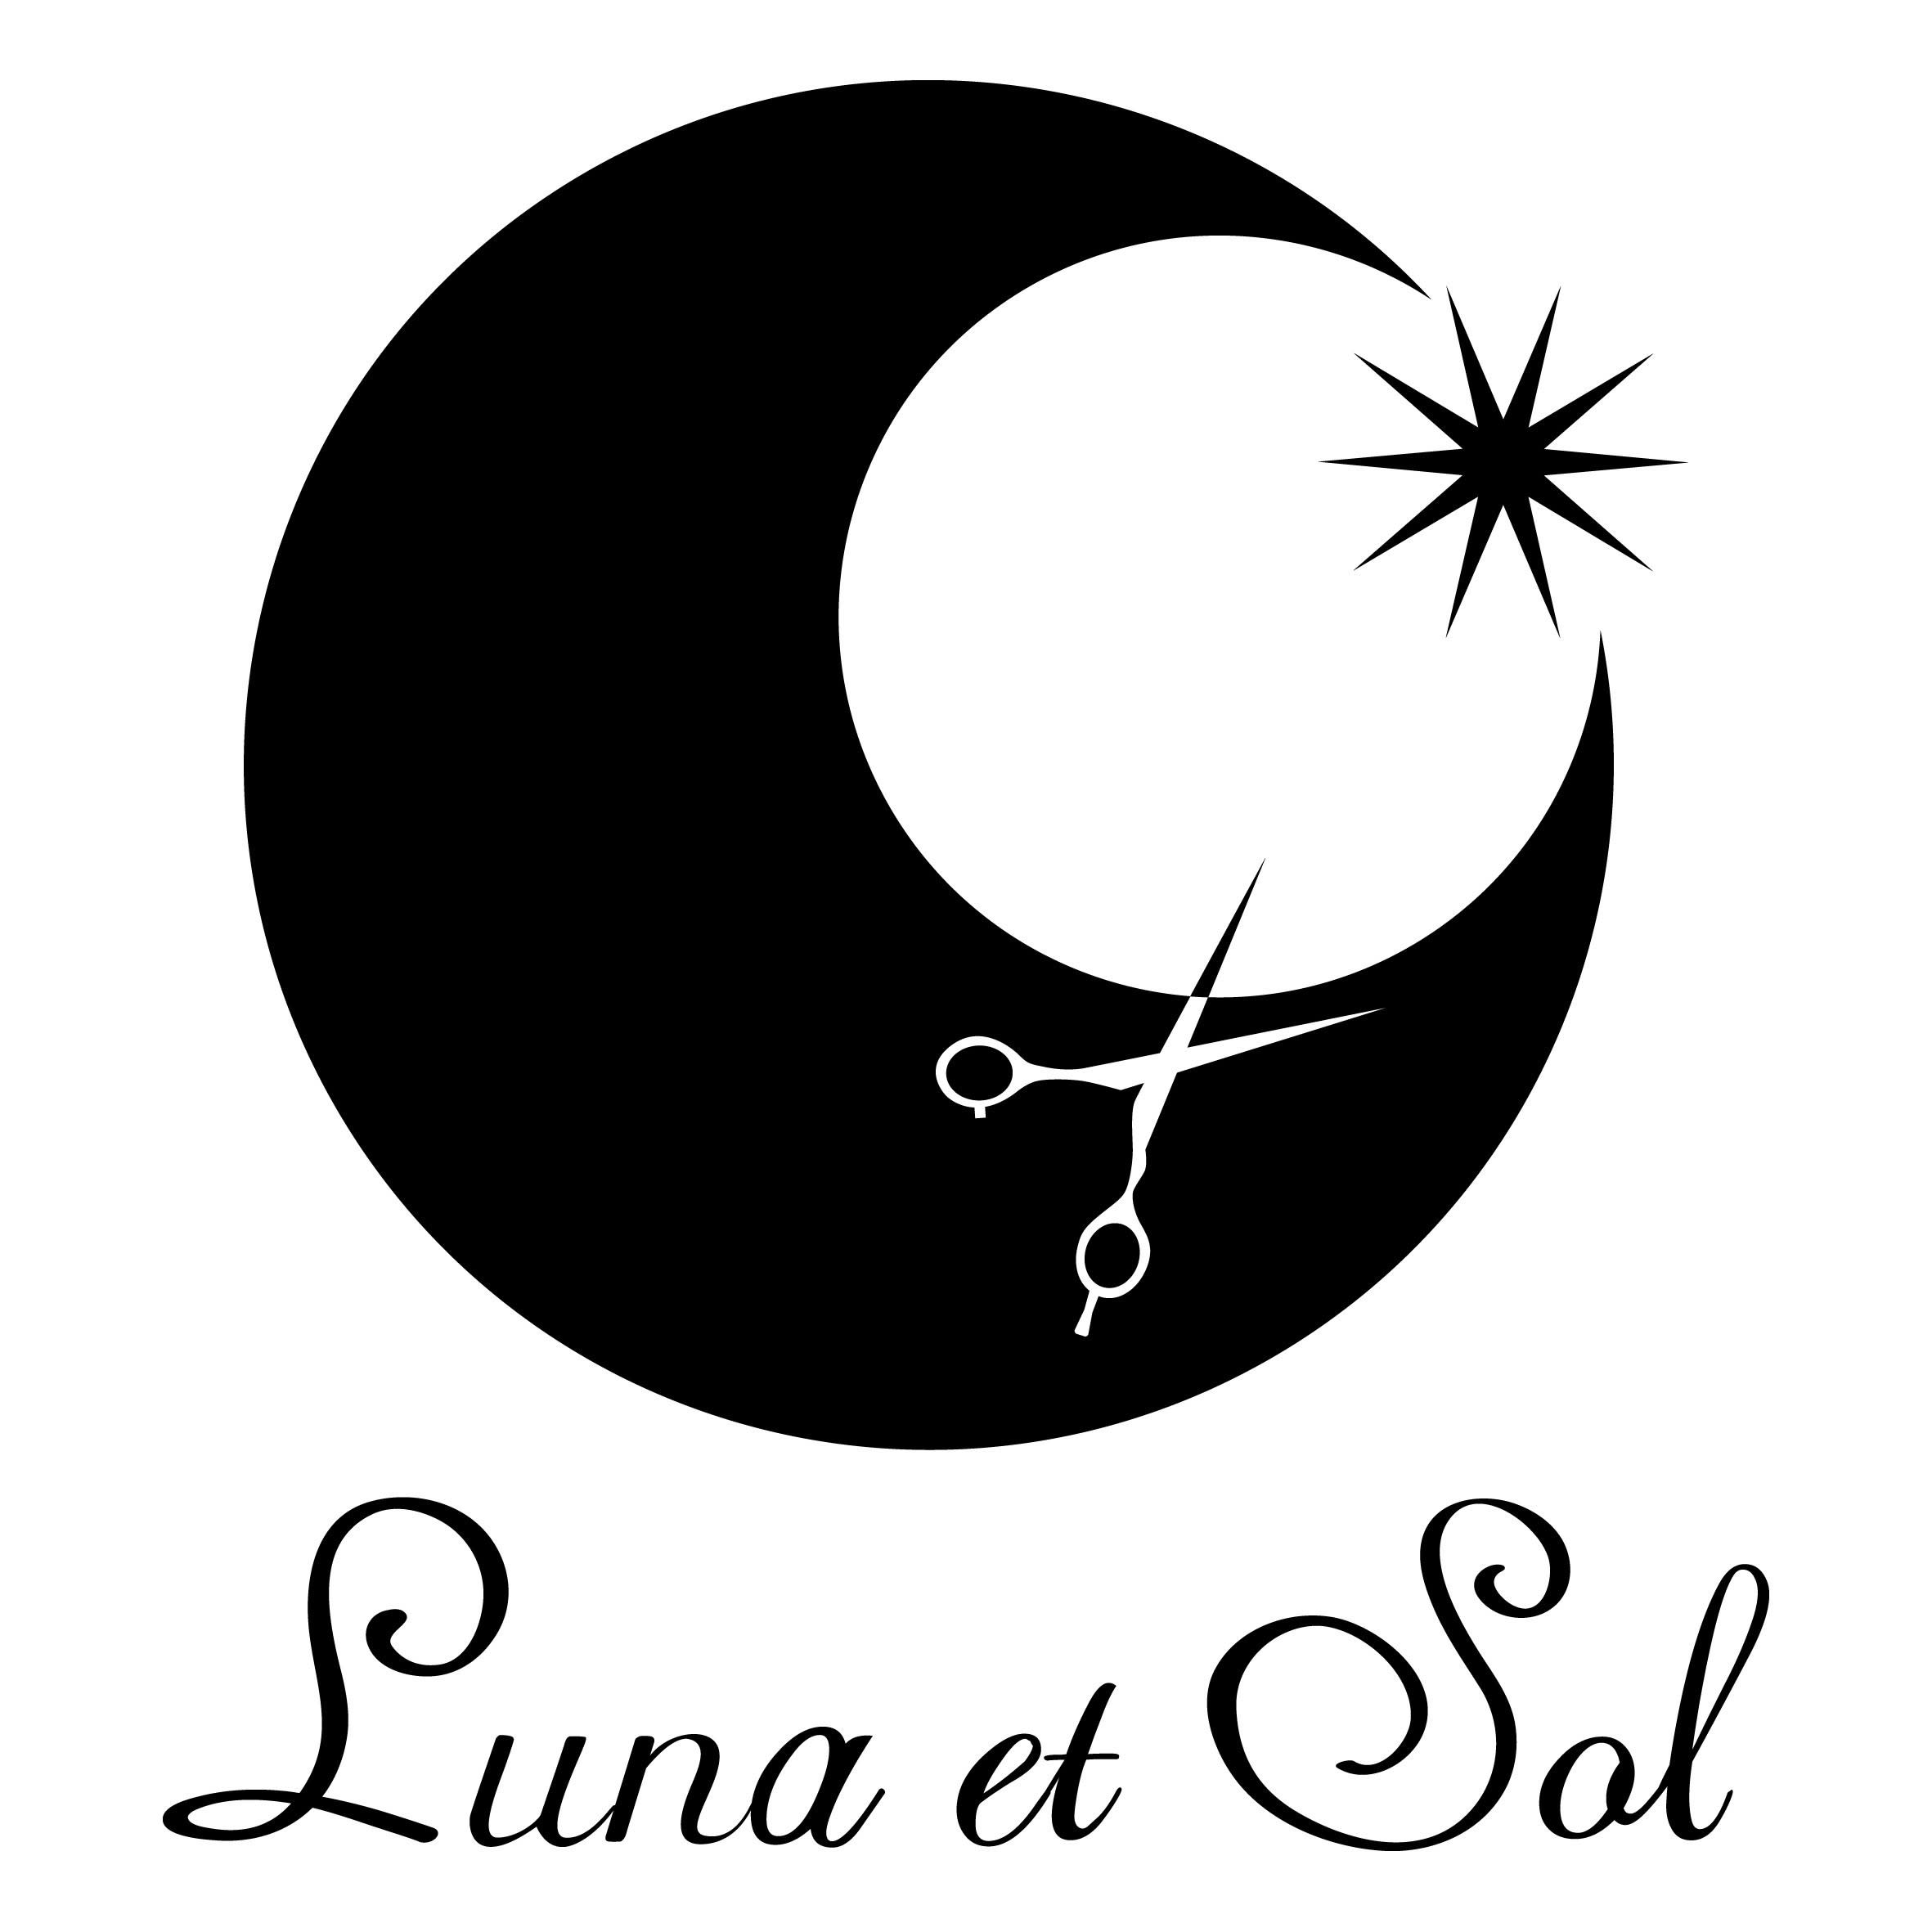 Luna et Sol 【ルナエソル】【ルナエソル】のスタイル紹介。【Luna et Sol】style4 